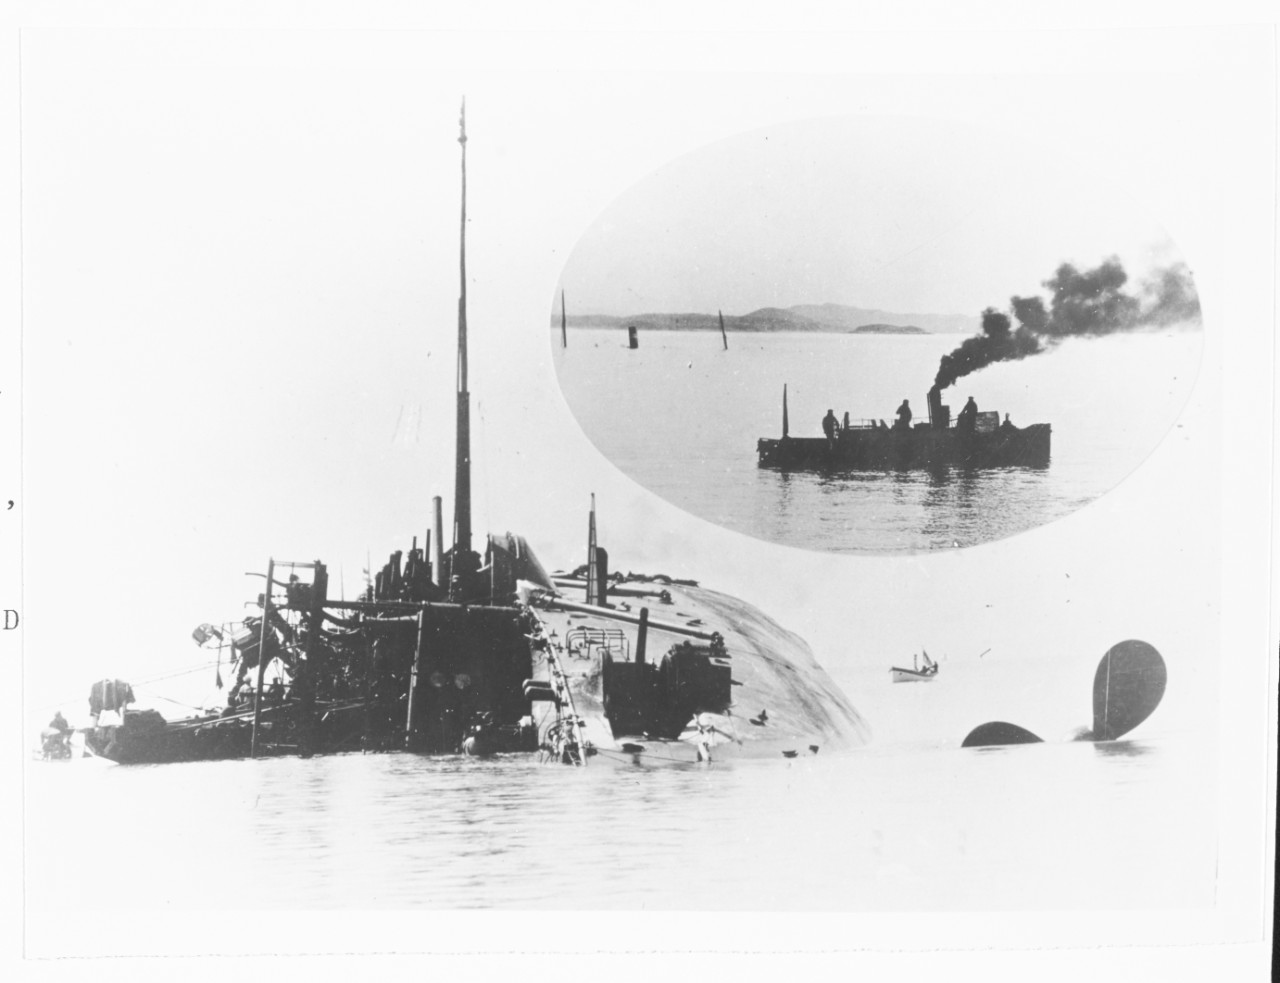 VARIAG (Russian cruiser, 1899)